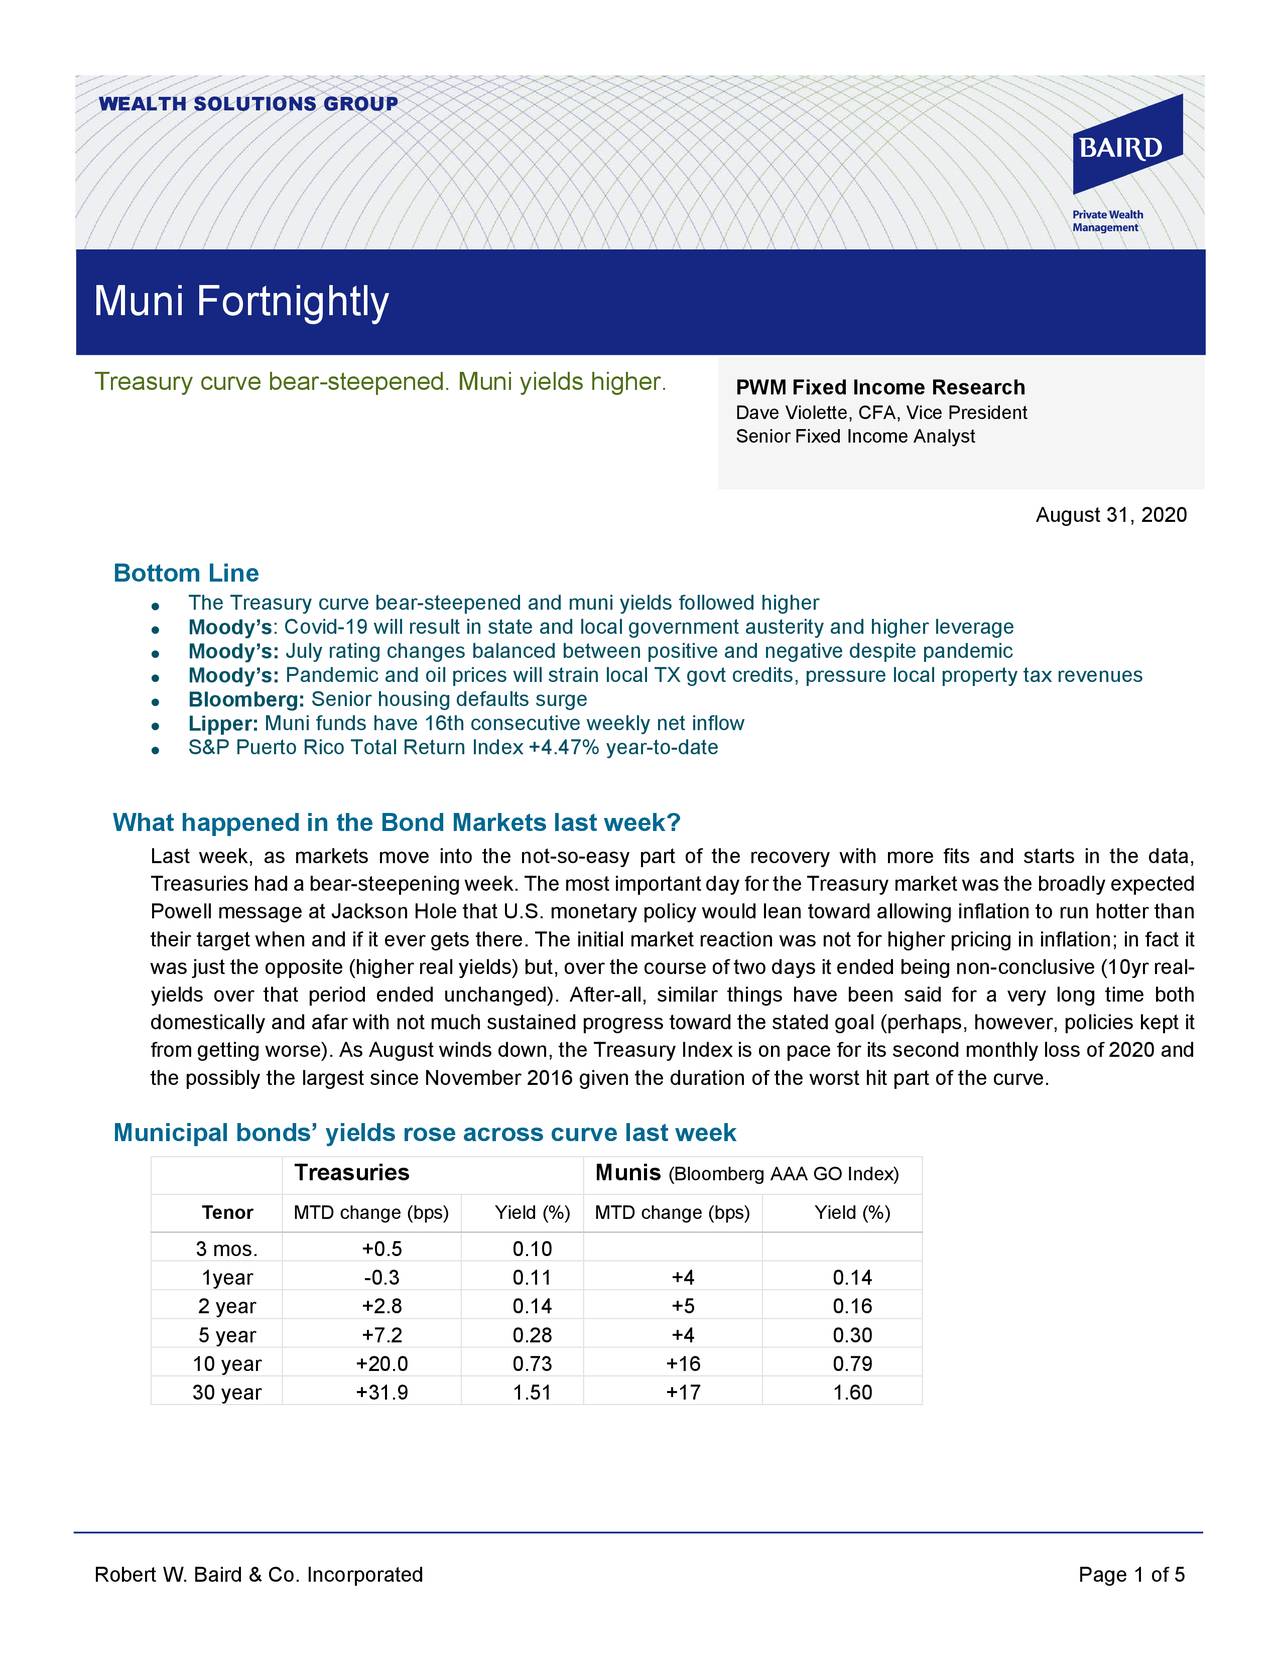 Treasury Curve Bear-Steepened; Muni Yields Higher - Muni Fortnightly, August 31, 2020